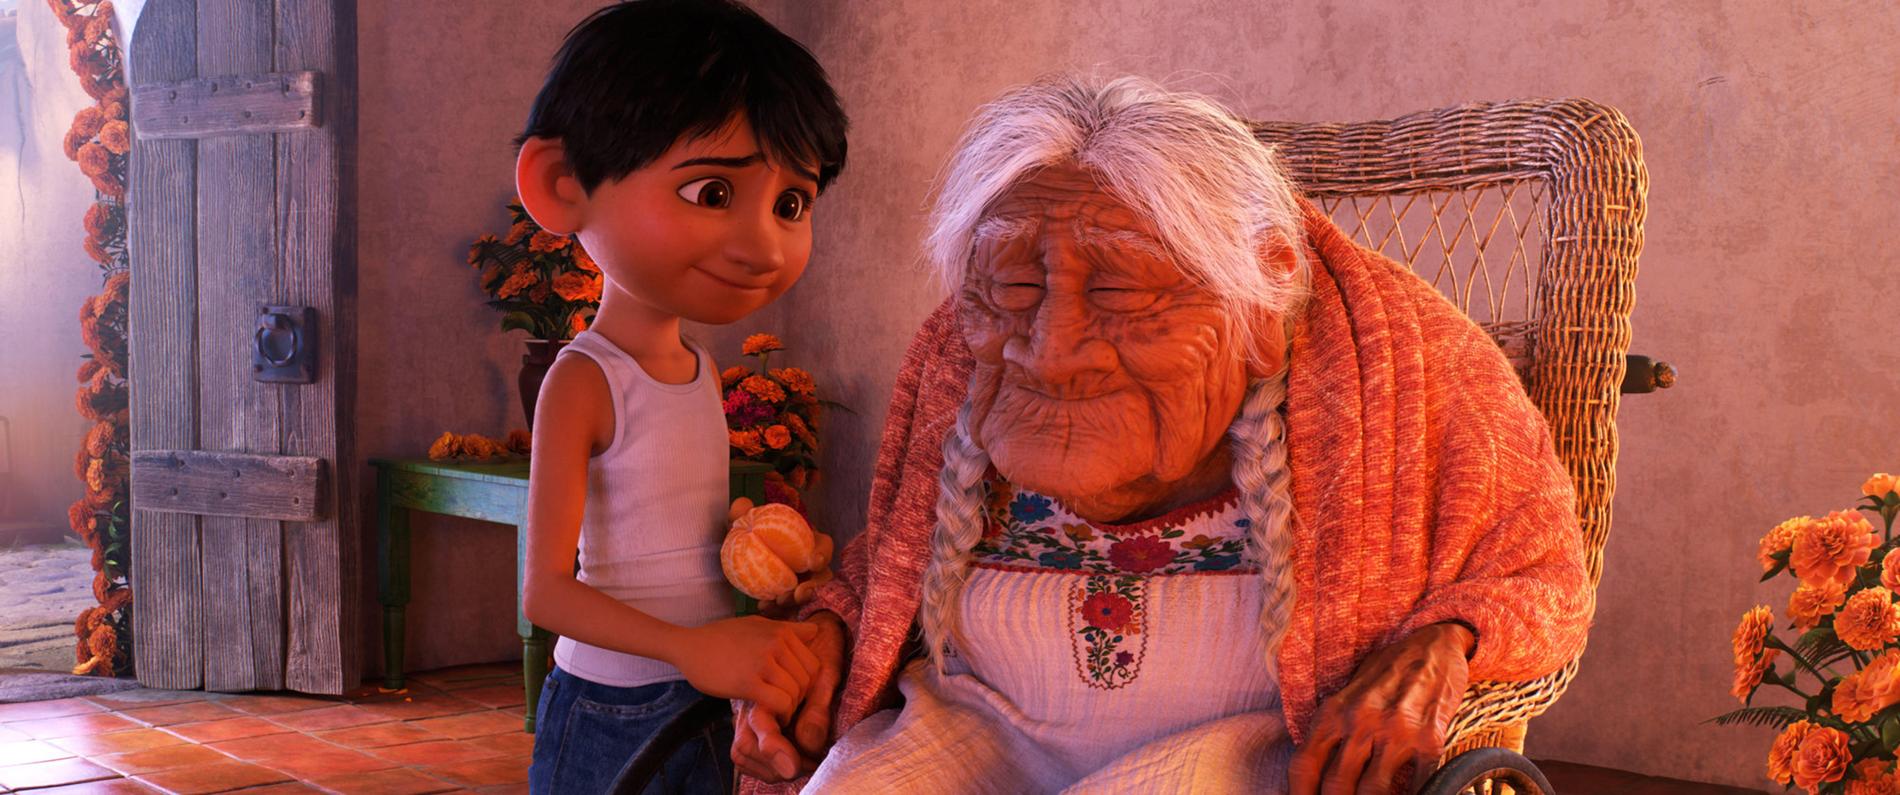 Bild från filmen ”Coco”, Ana Ofelia Murguía spelade Mama Coco (t.h). 